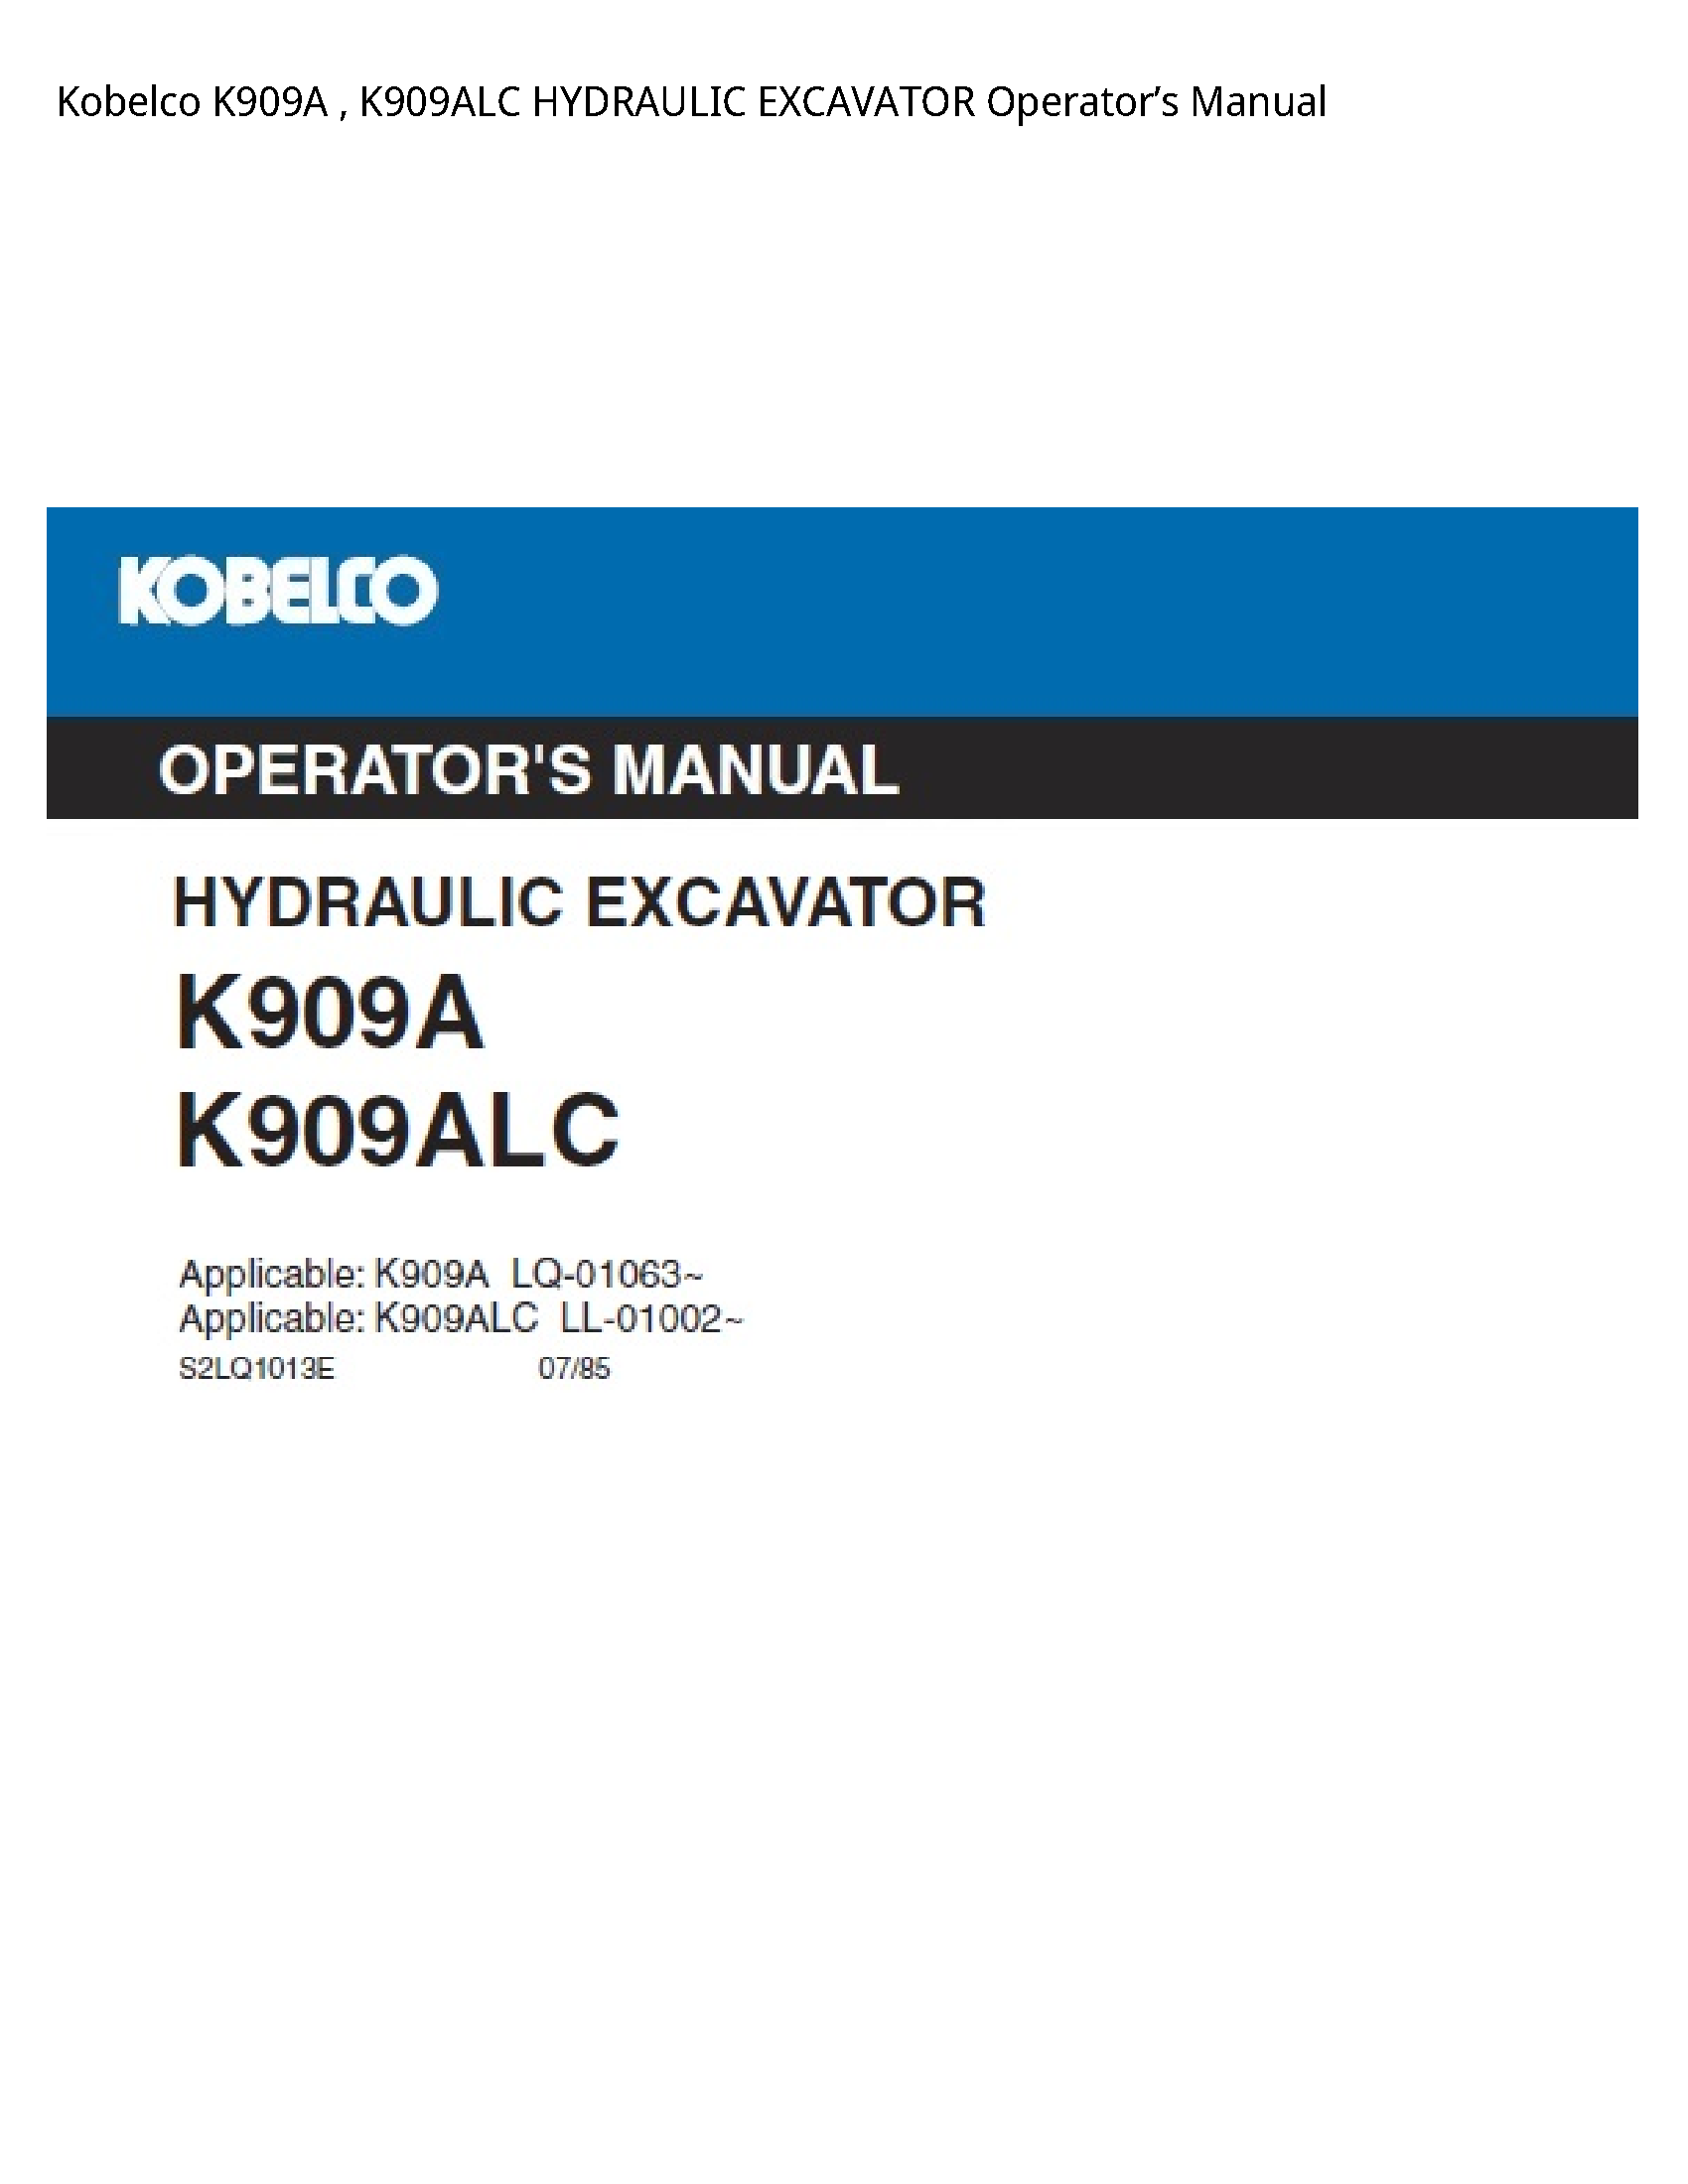 Kobelco K909A HYDRAULIC EXCAVATOR Operator’s manual